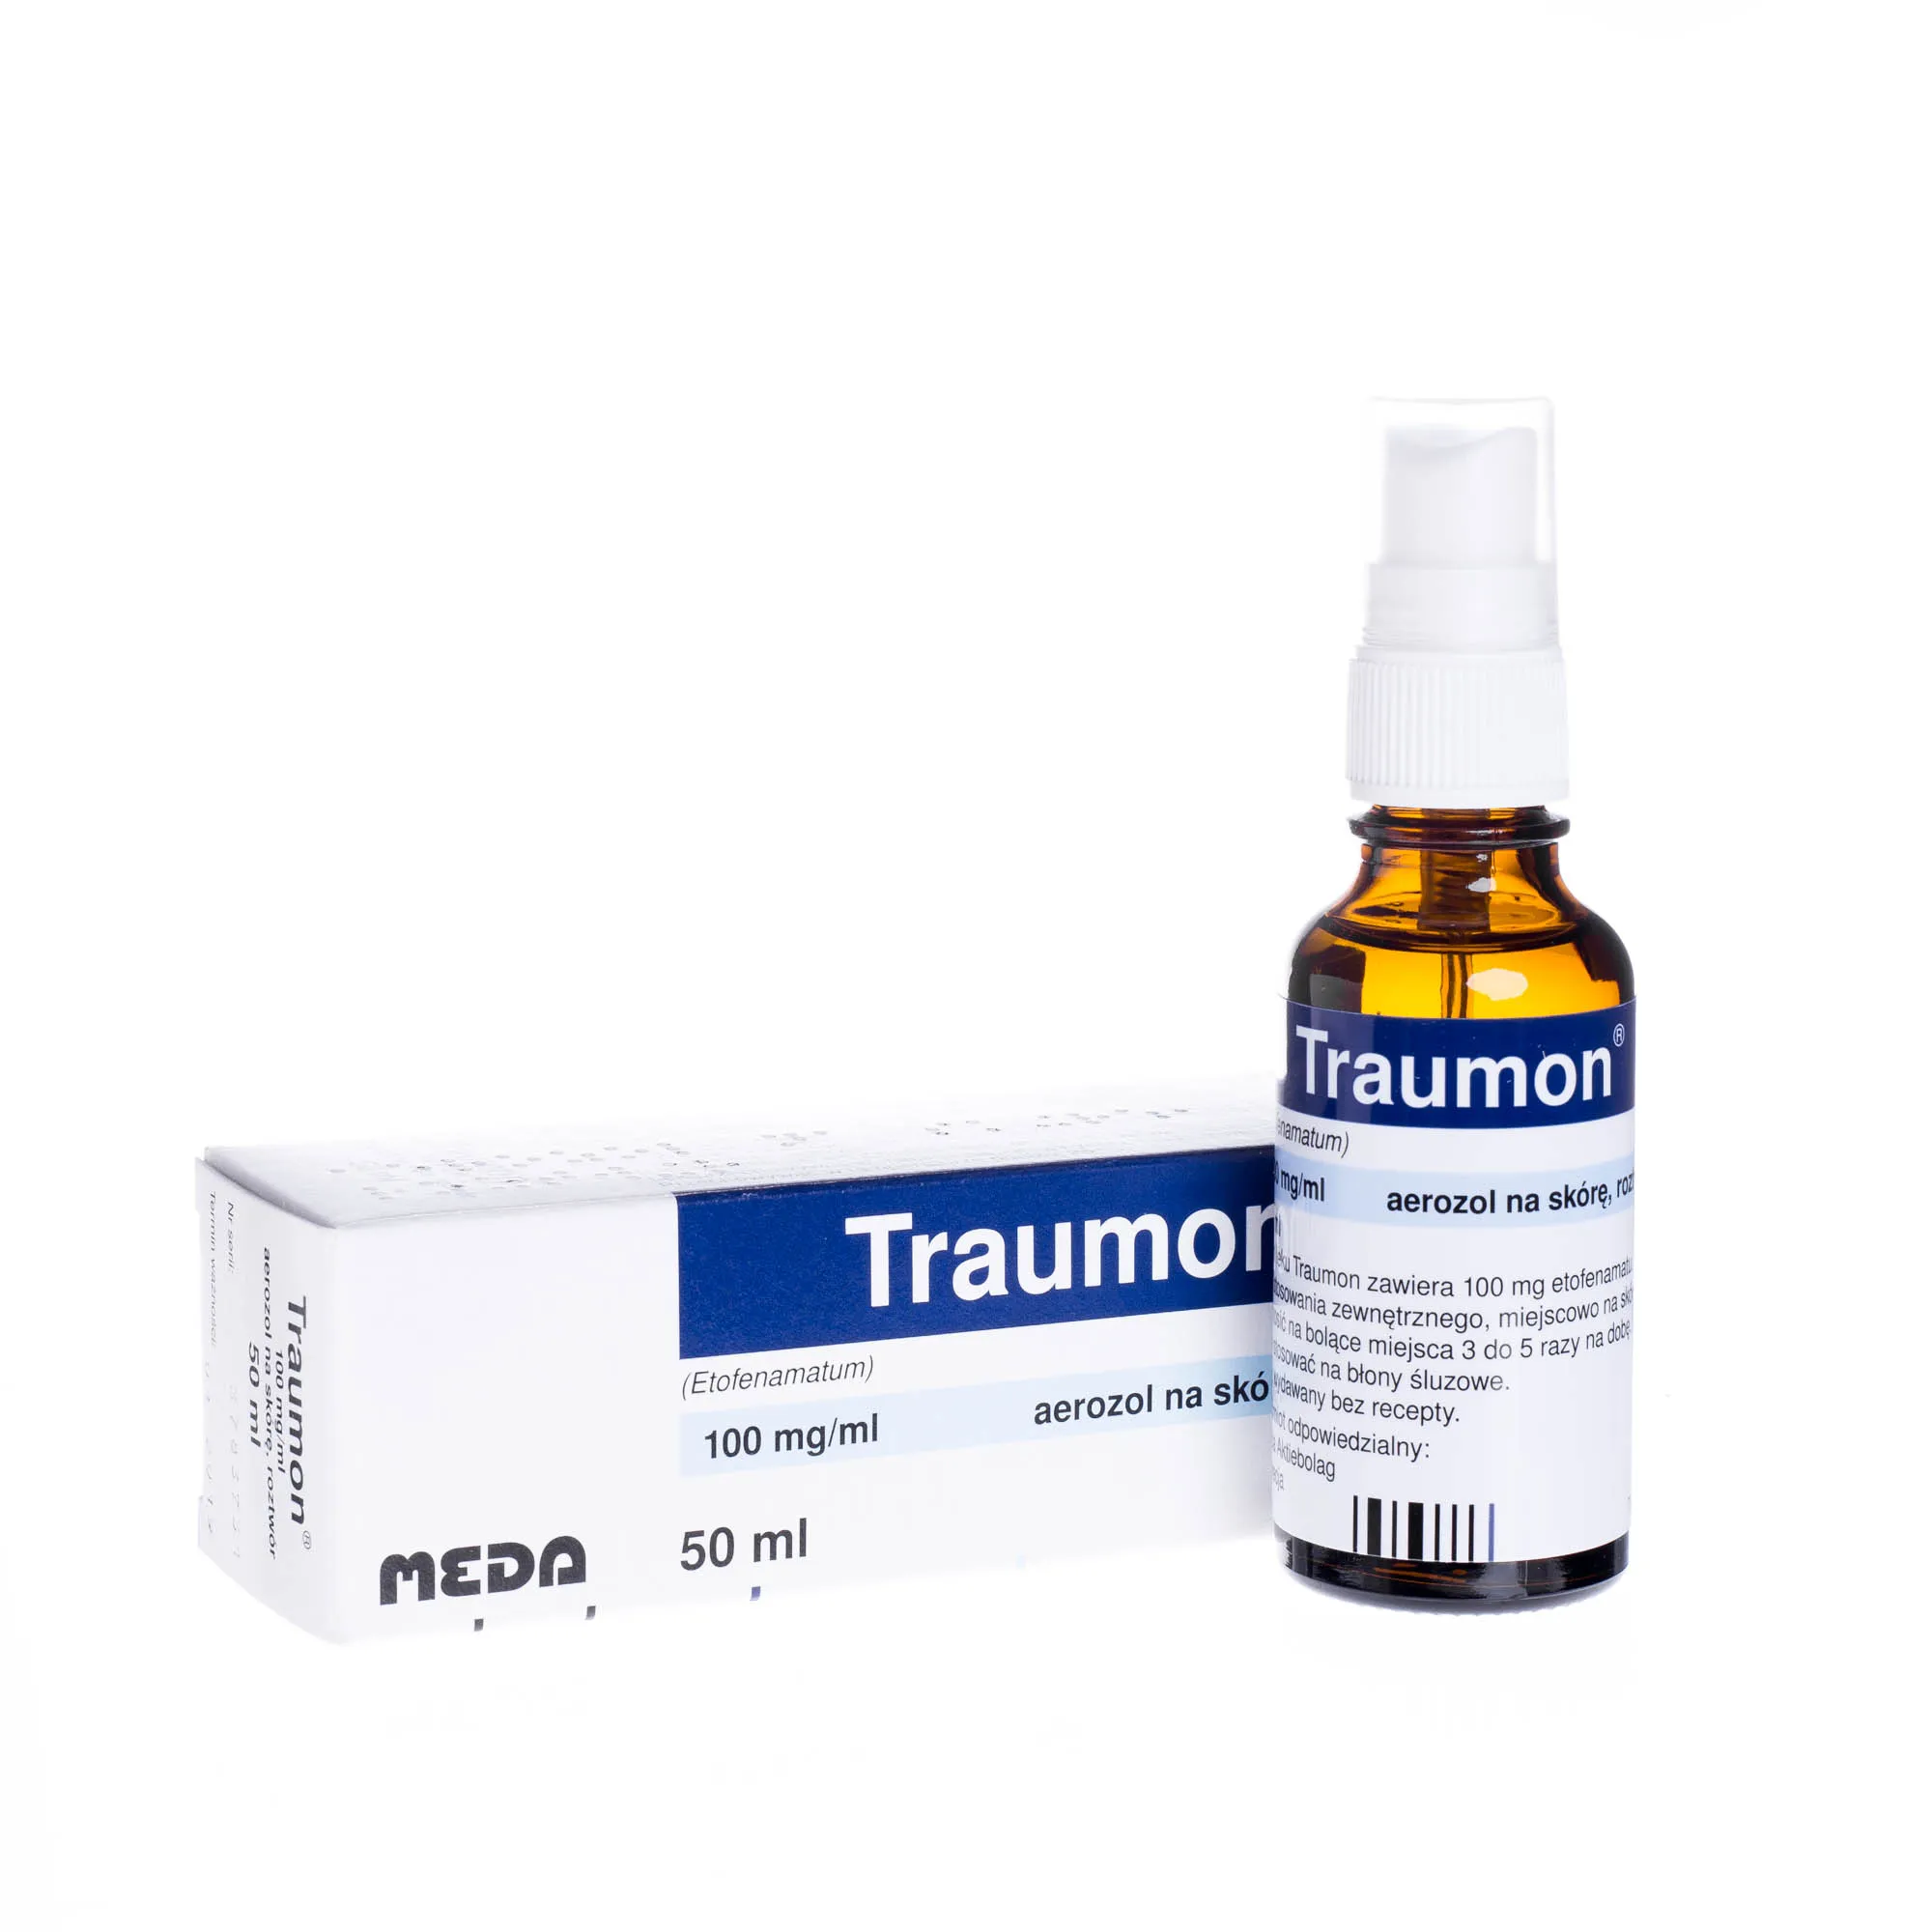 Traumon 100 mg/ml, aerozol na skórę, roztwór, 50 ml 